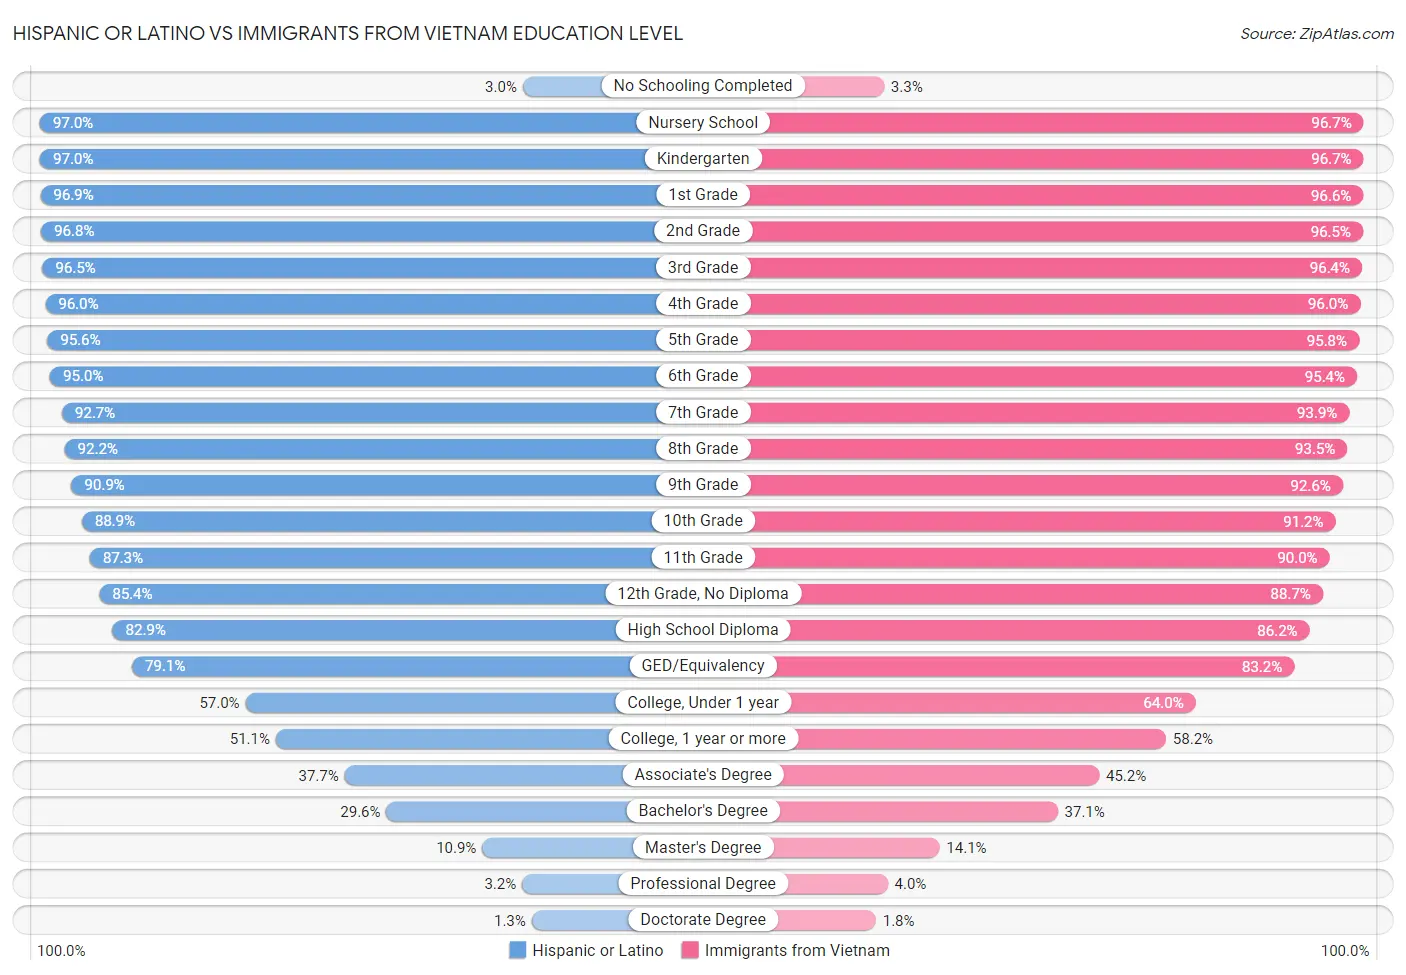 Hispanic or Latino vs Immigrants from Vietnam Education Level